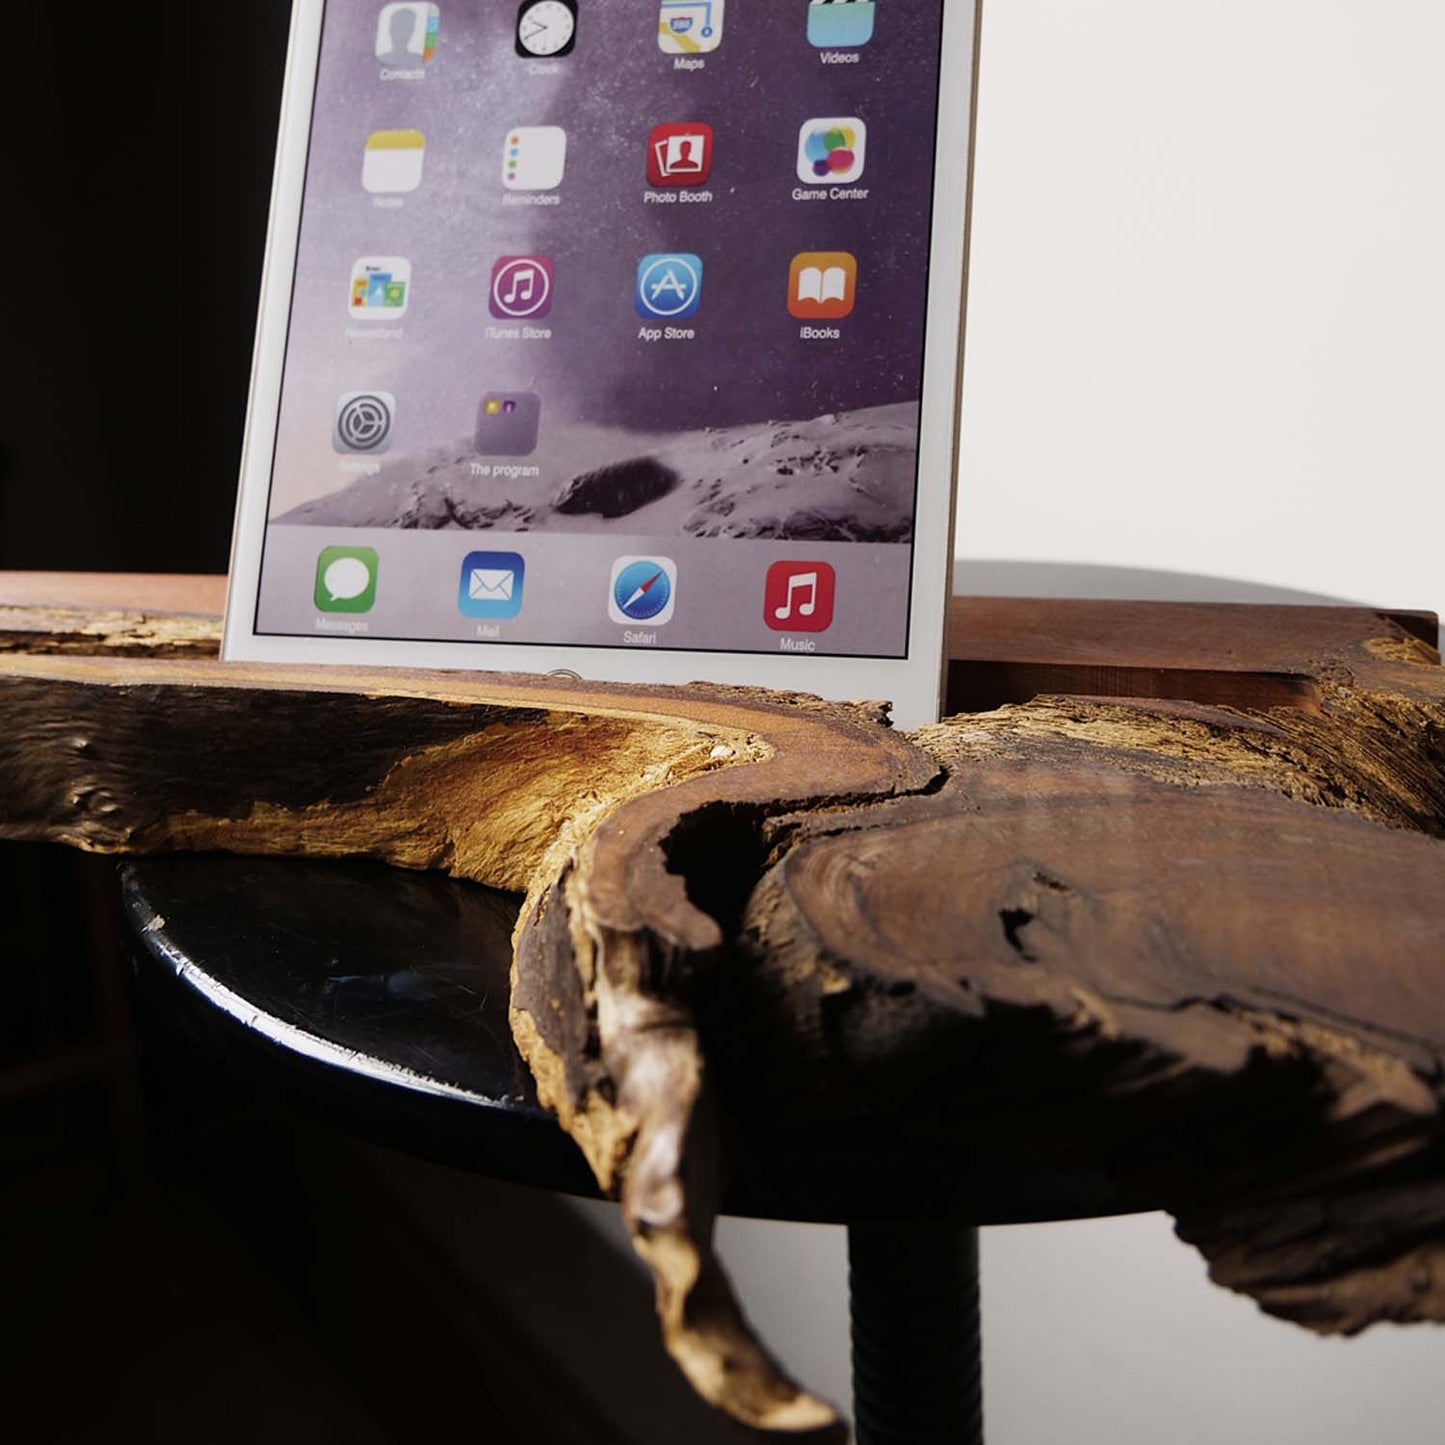 British Yew Tree iPad/tablet stand